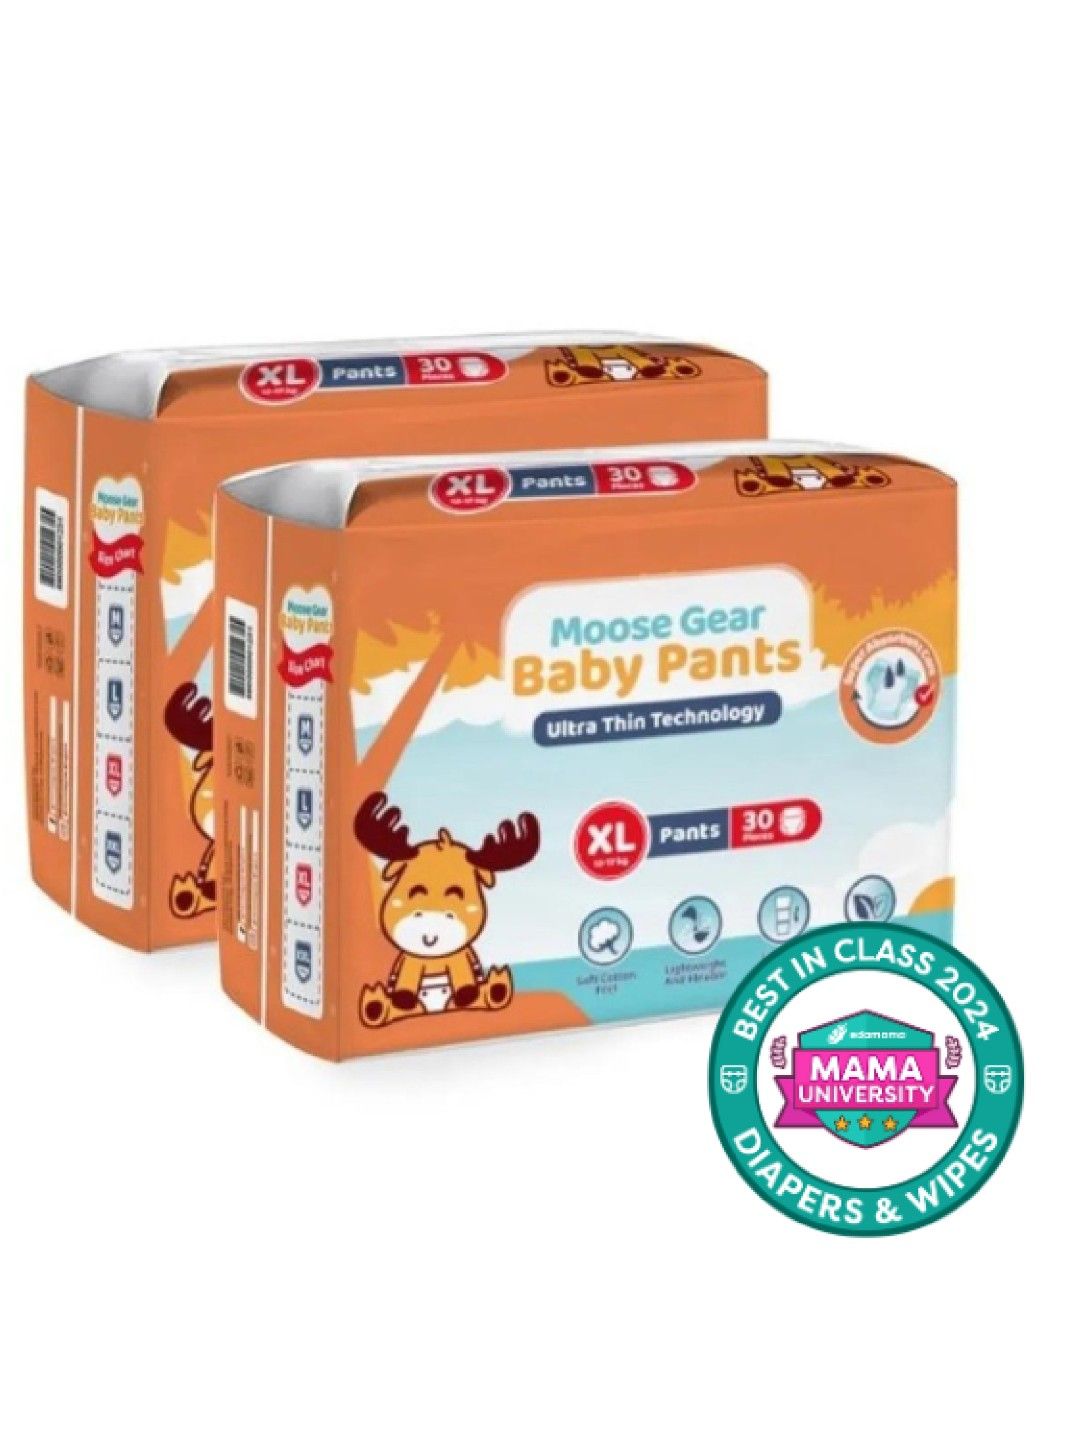 Moose Gear Baby Pants Diapers XL 2-Pack (60 pcs)